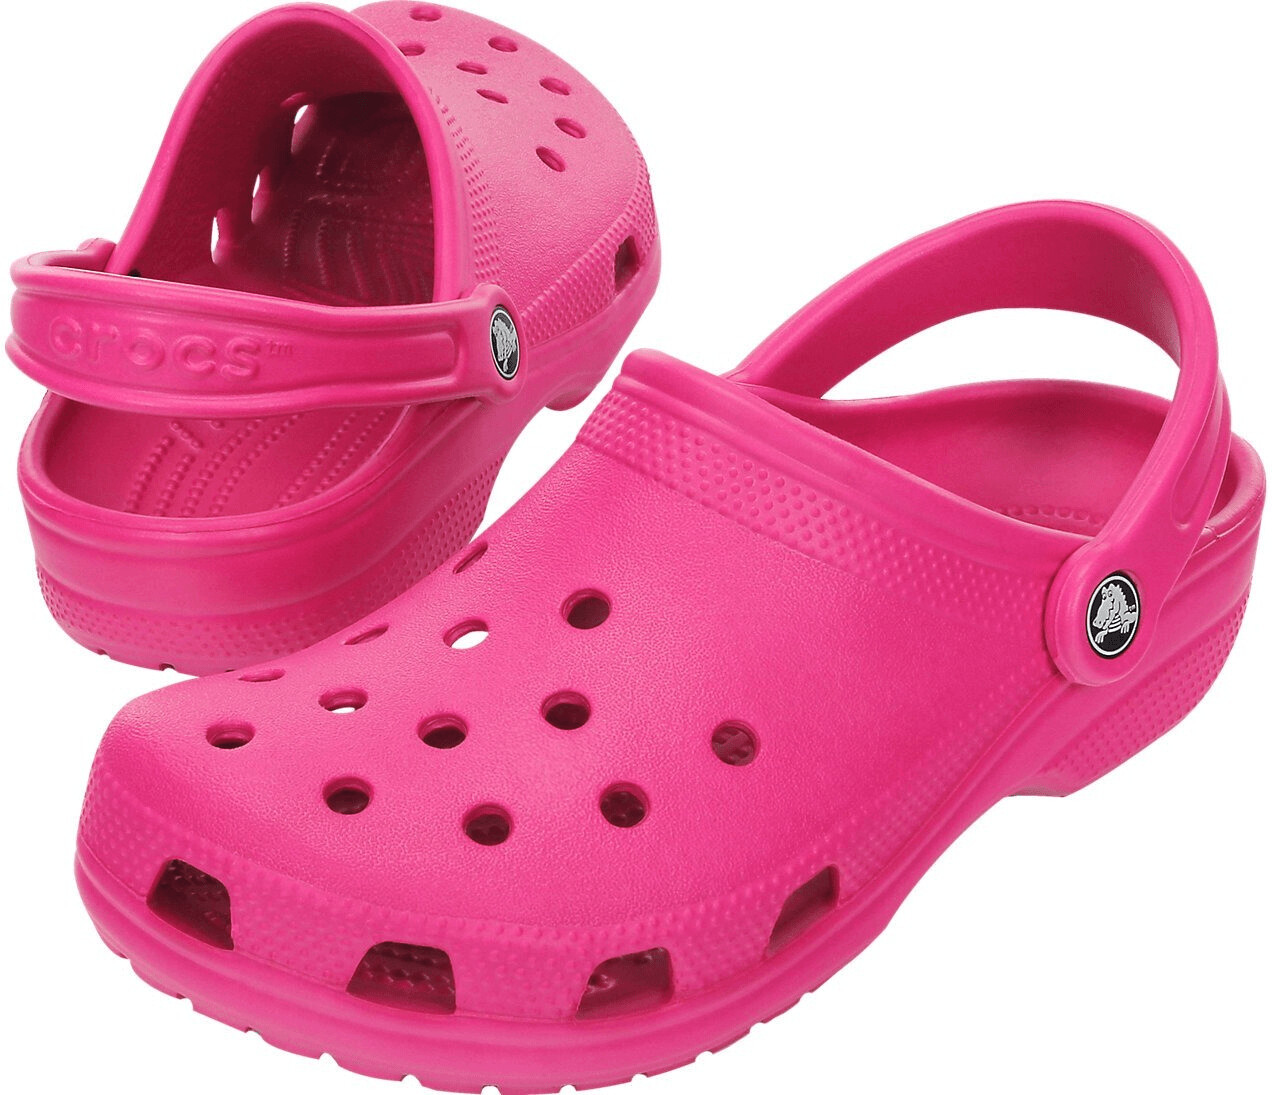 candy pink translucent crocs